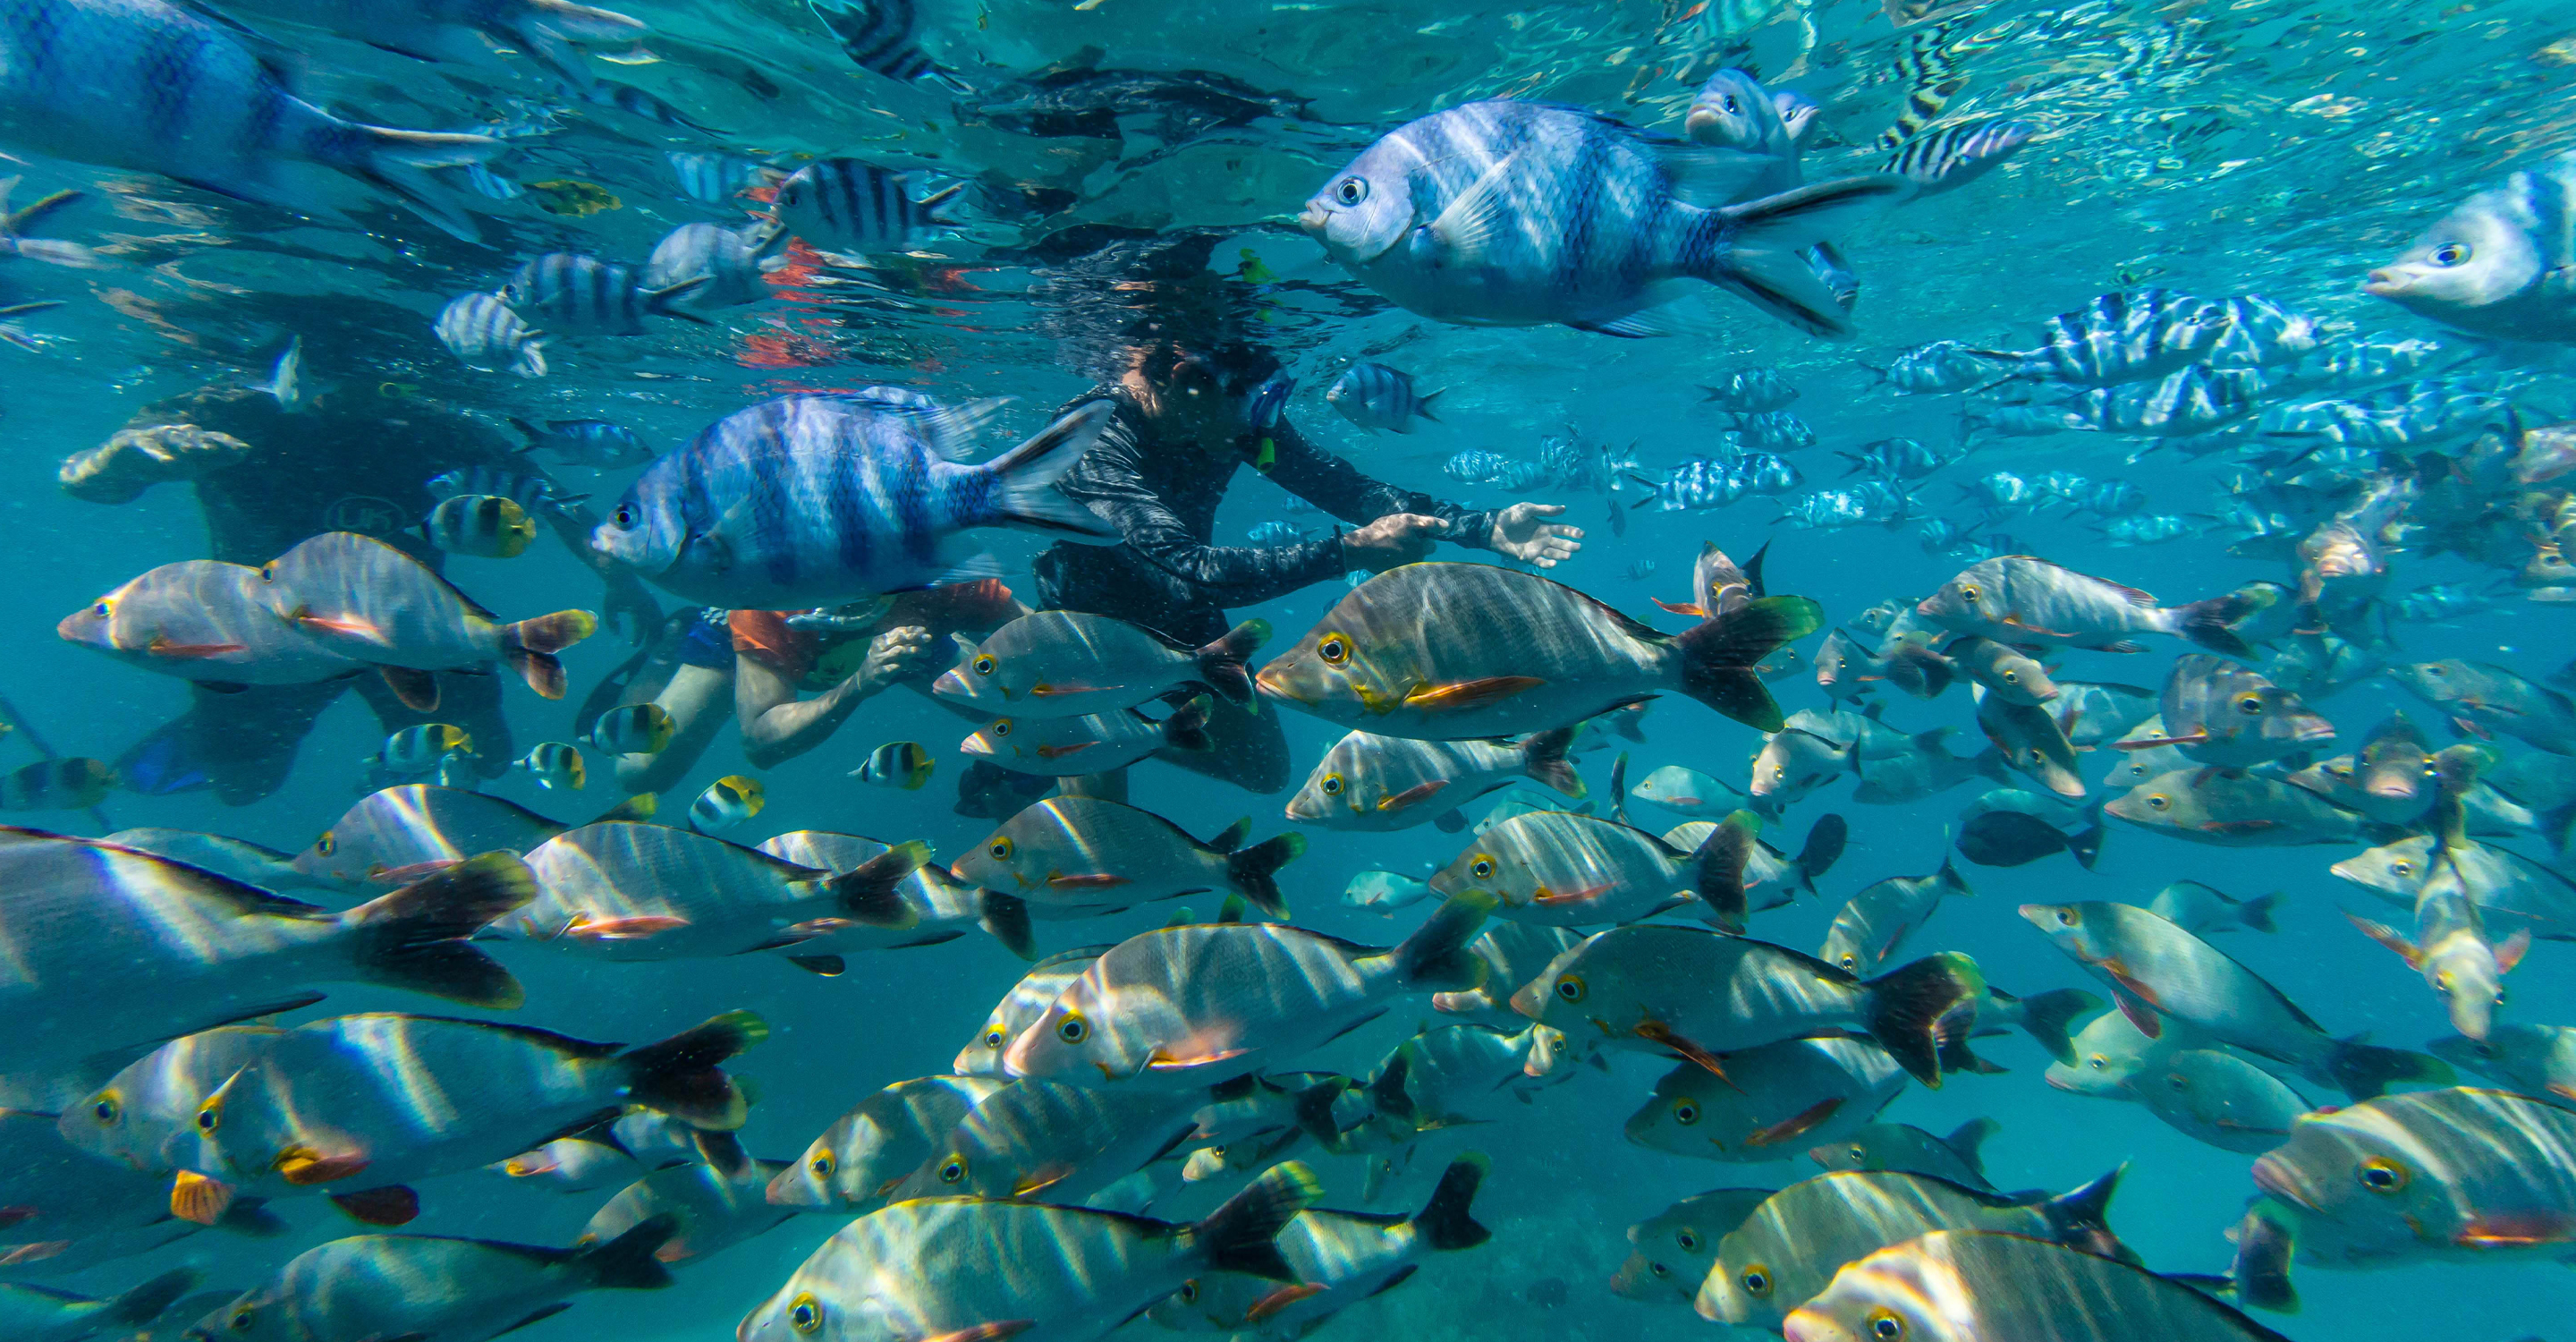 A snorkeler swims with tropical fish, Tuamotu Archipelago